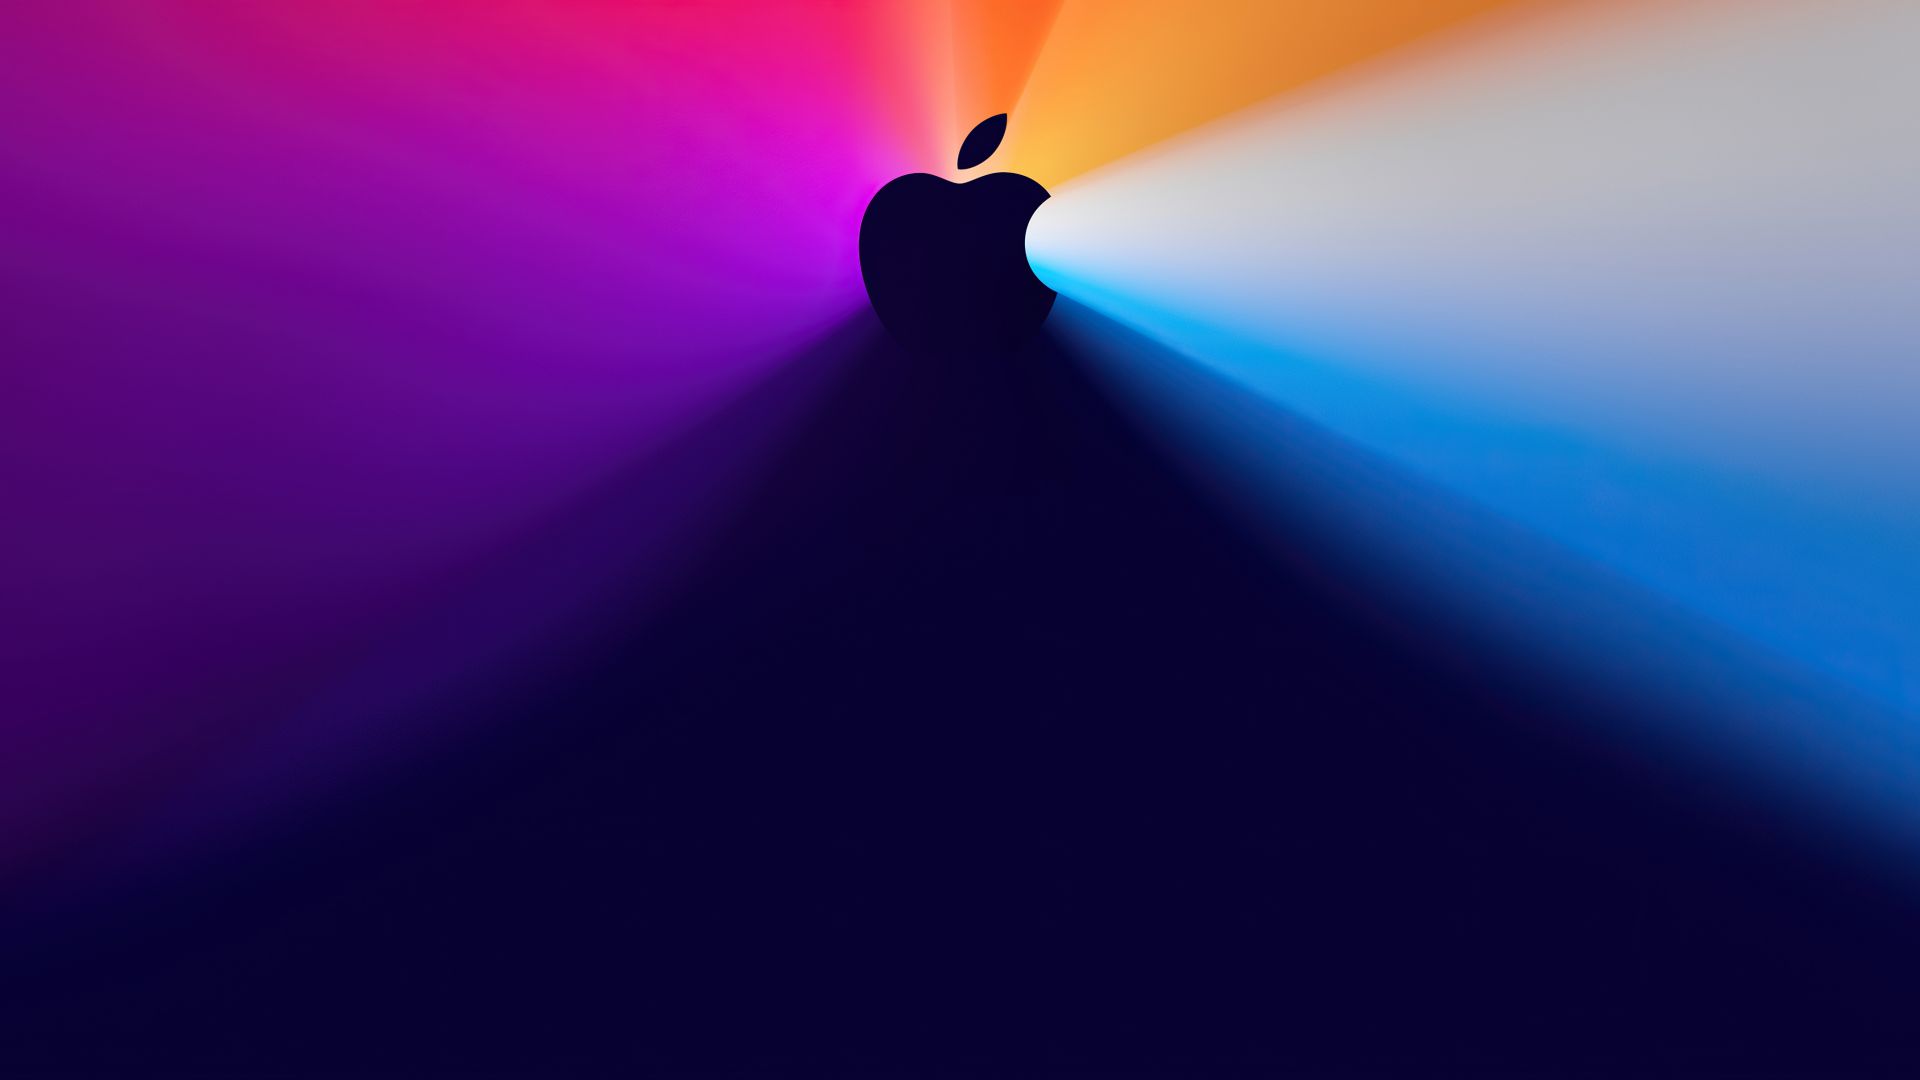 Apple November 2020 Event, 5K (horizontal)